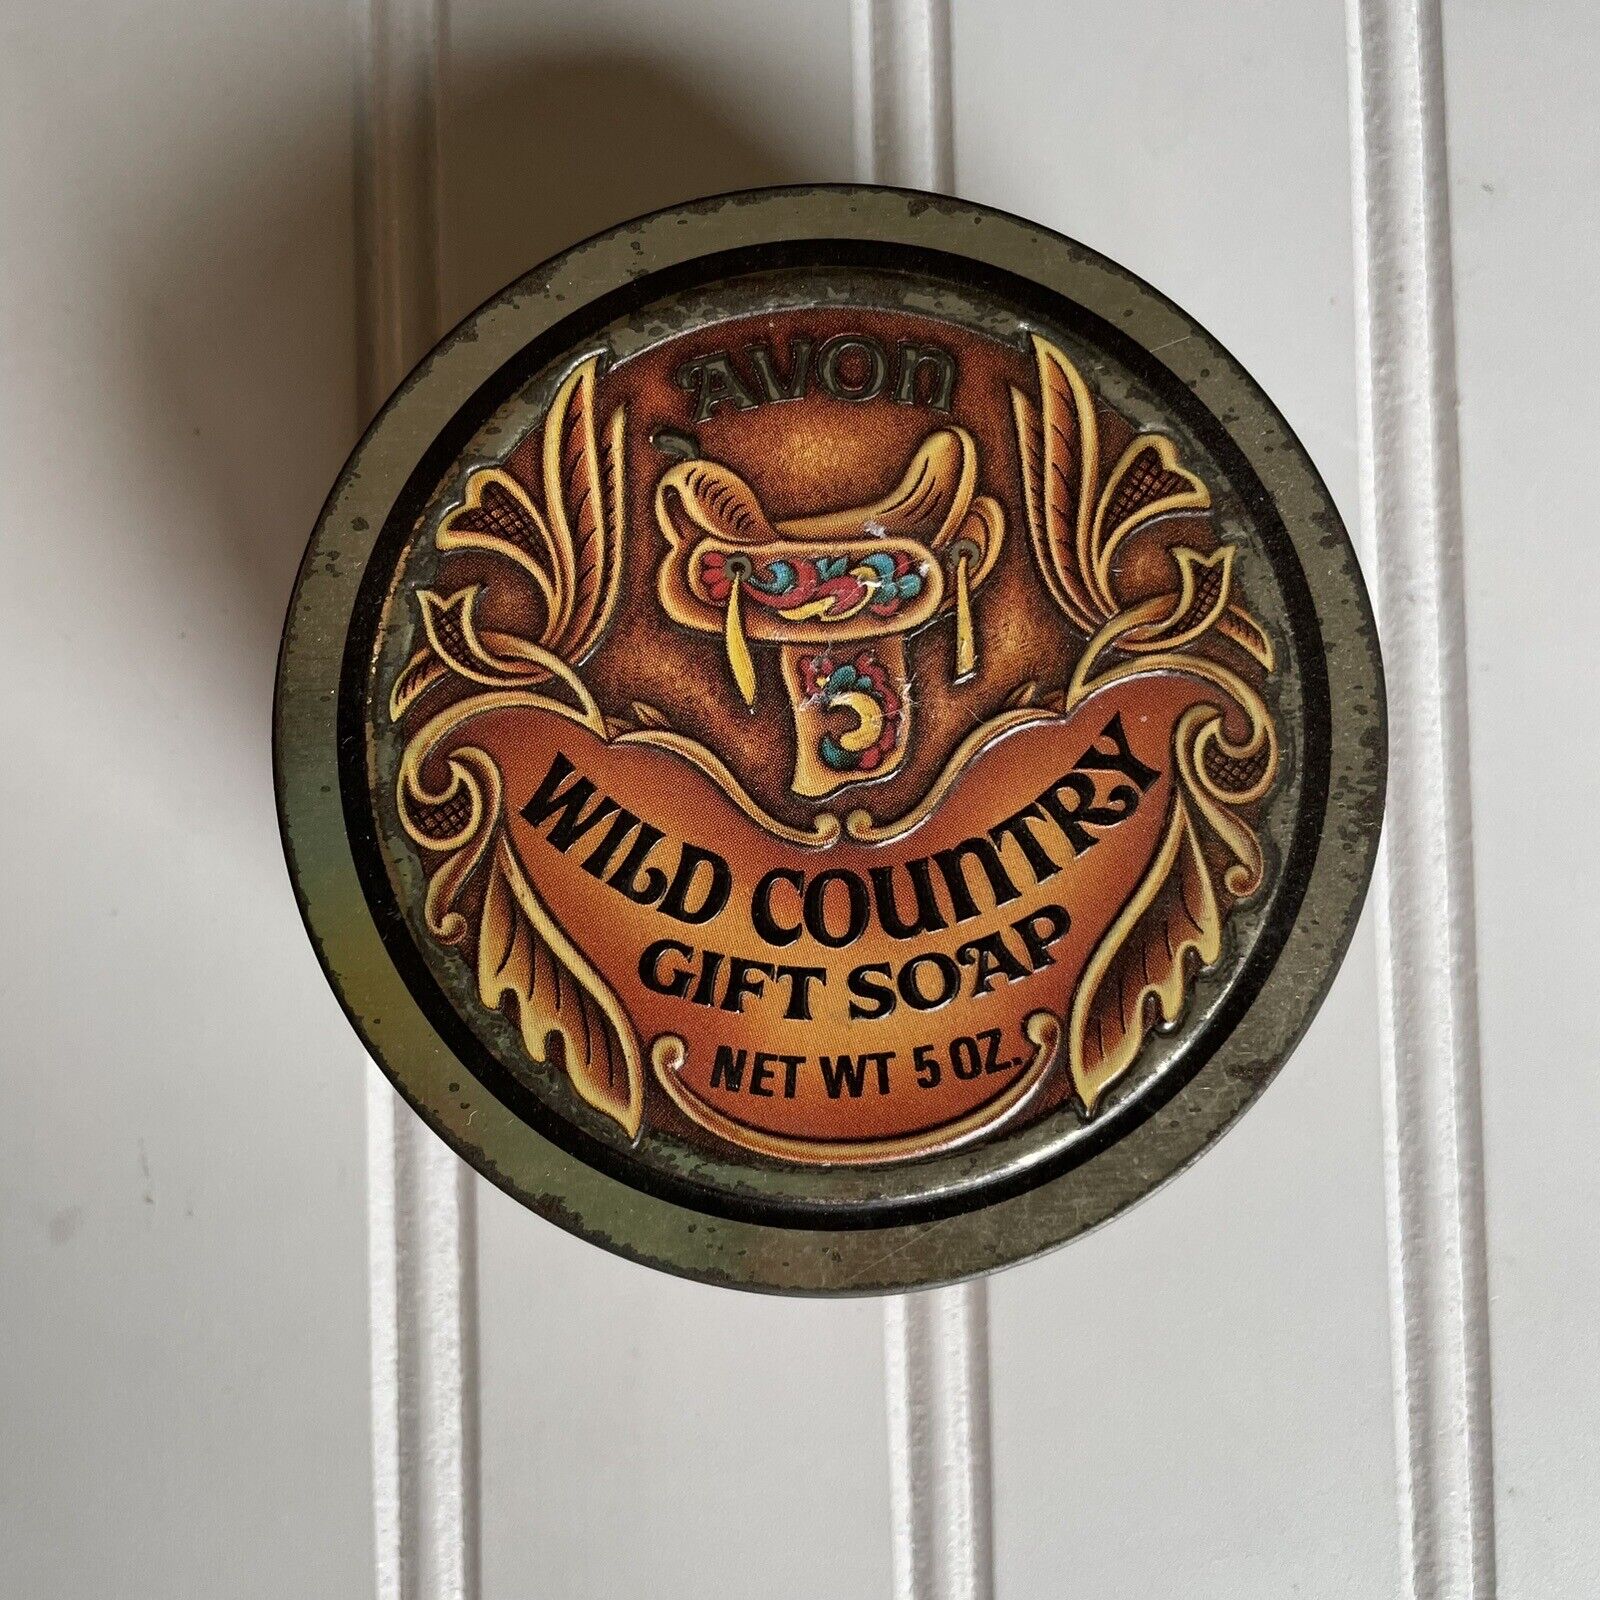 Vintage Avon Wild Country Gift Soap Trinket Tin Box Fragrance Man Cave Decor Без бренда